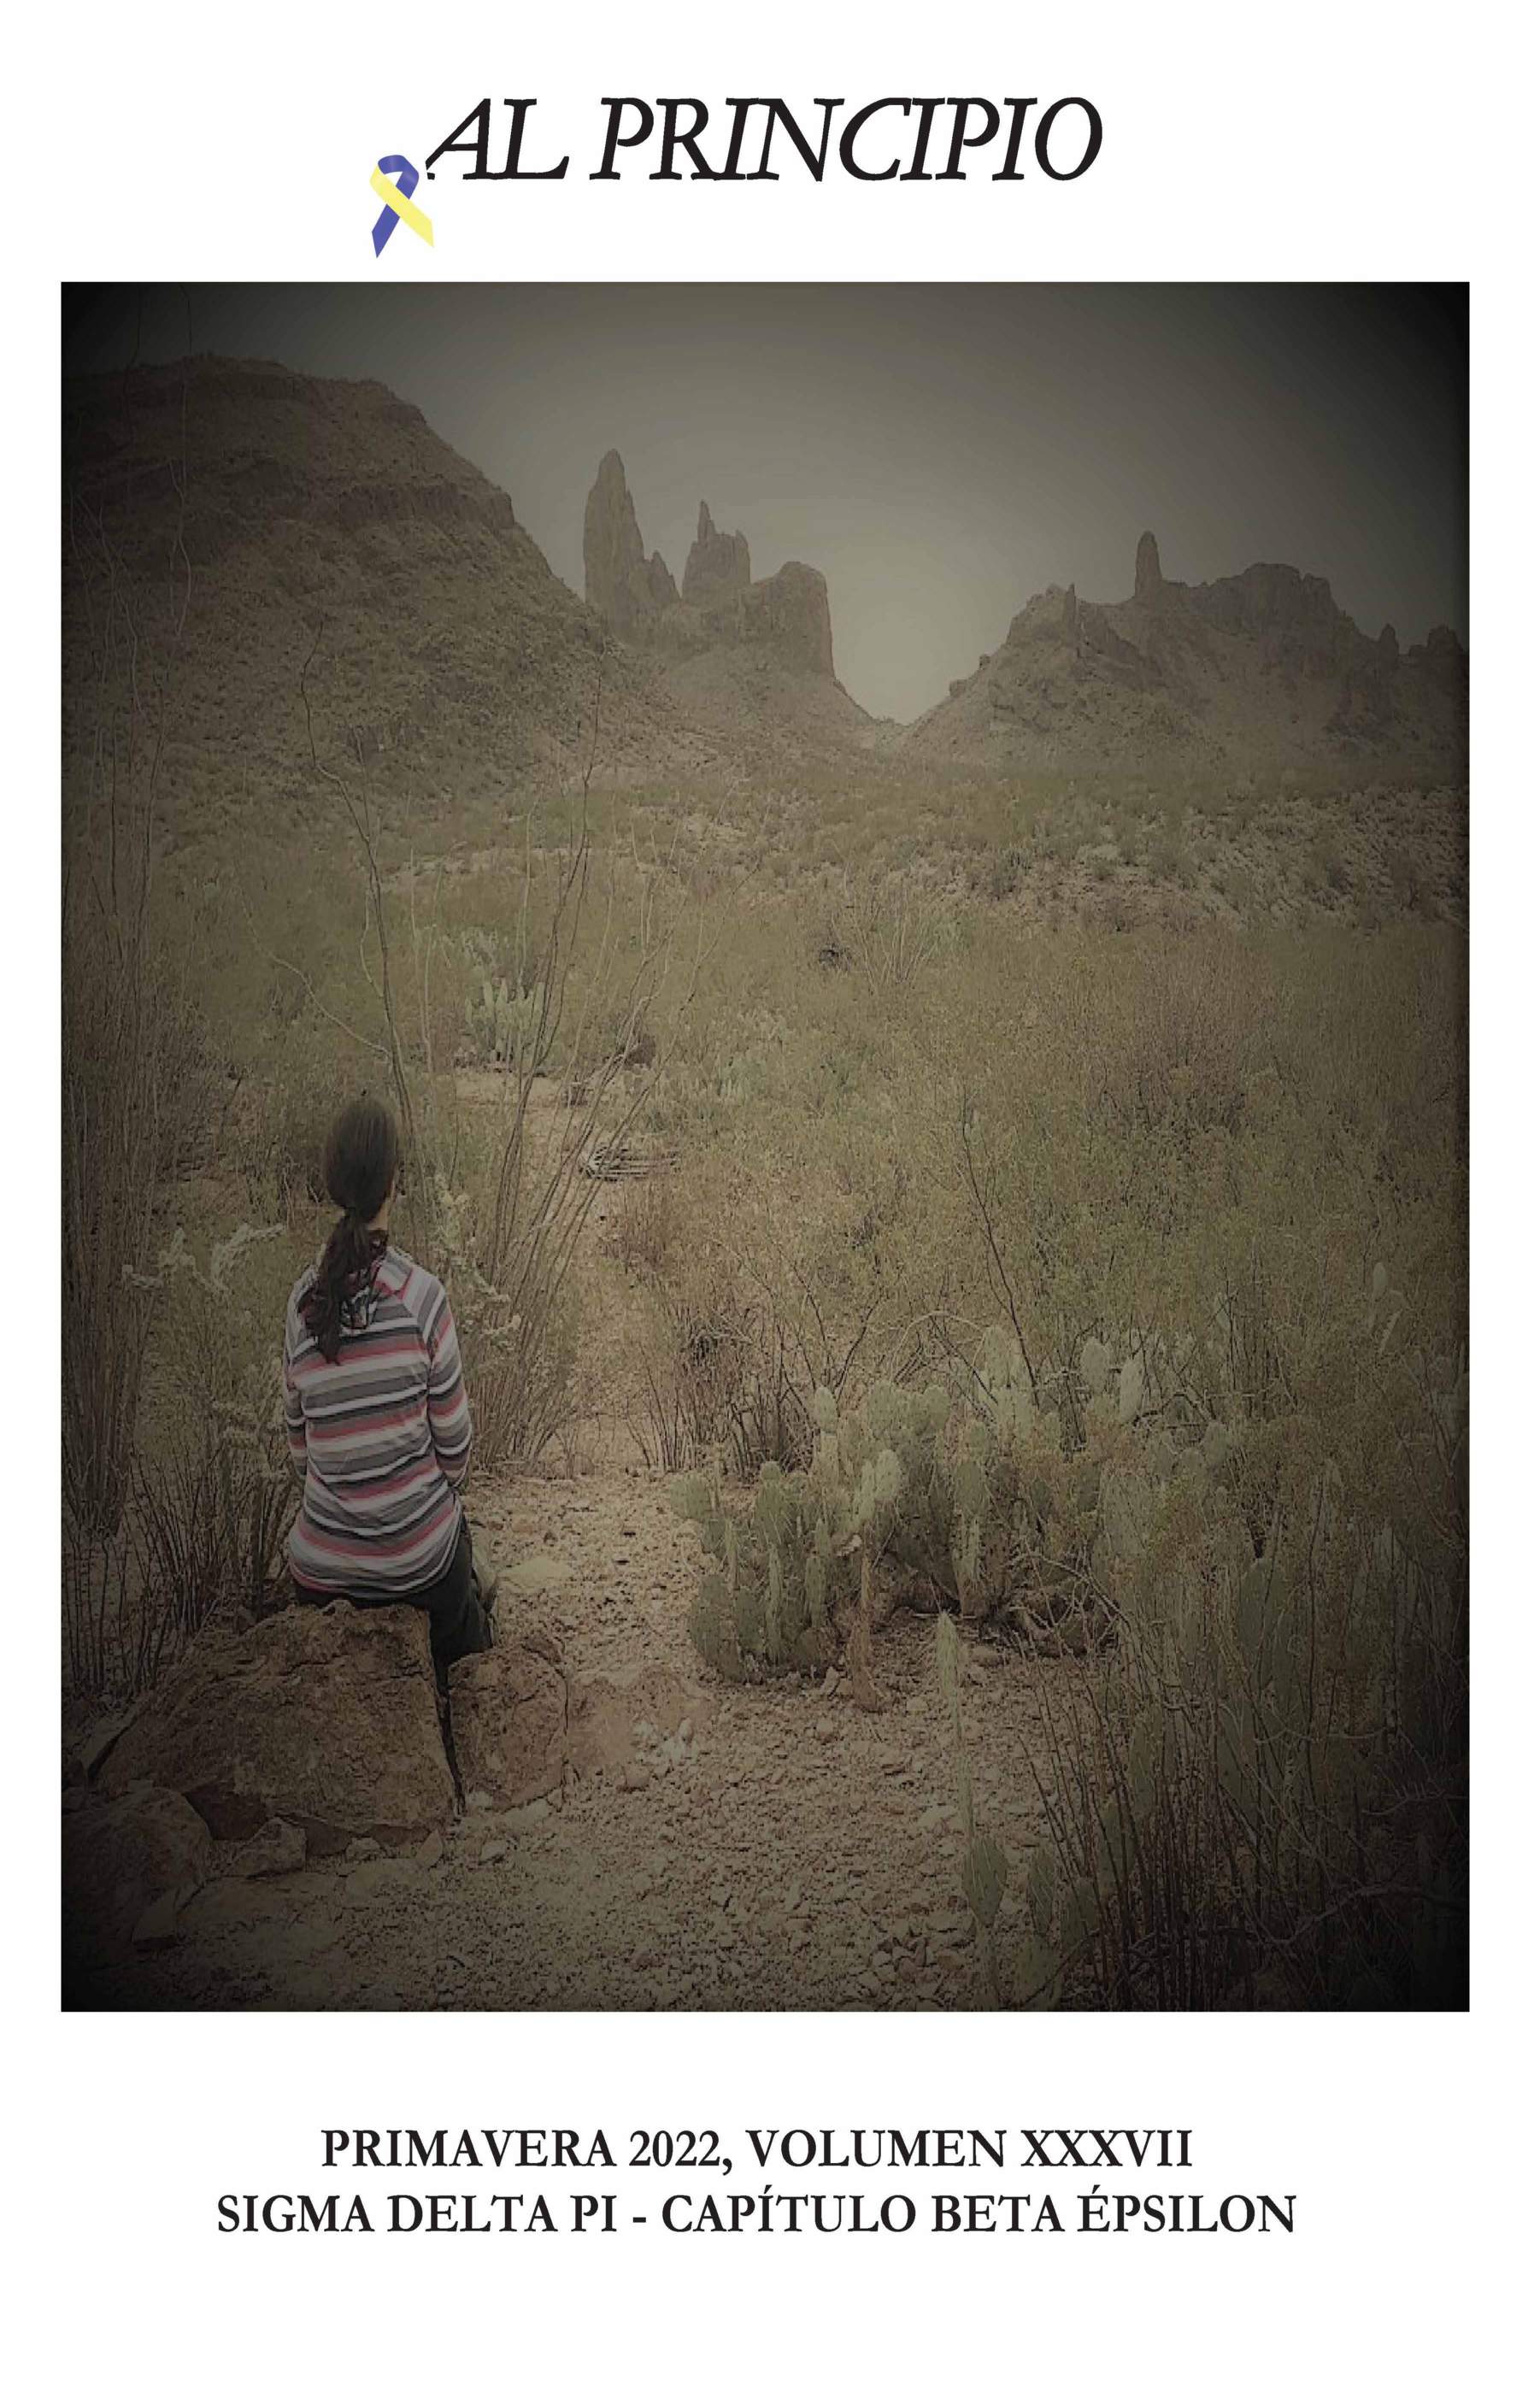 Photo of a woman wearing a striped shirt sitting on a rock in an arid landscape. Text: Al Principio. Primavera 2022, Volumen XXXVII. Sigma Delta Pi - Capítulo Beta Épsilon.